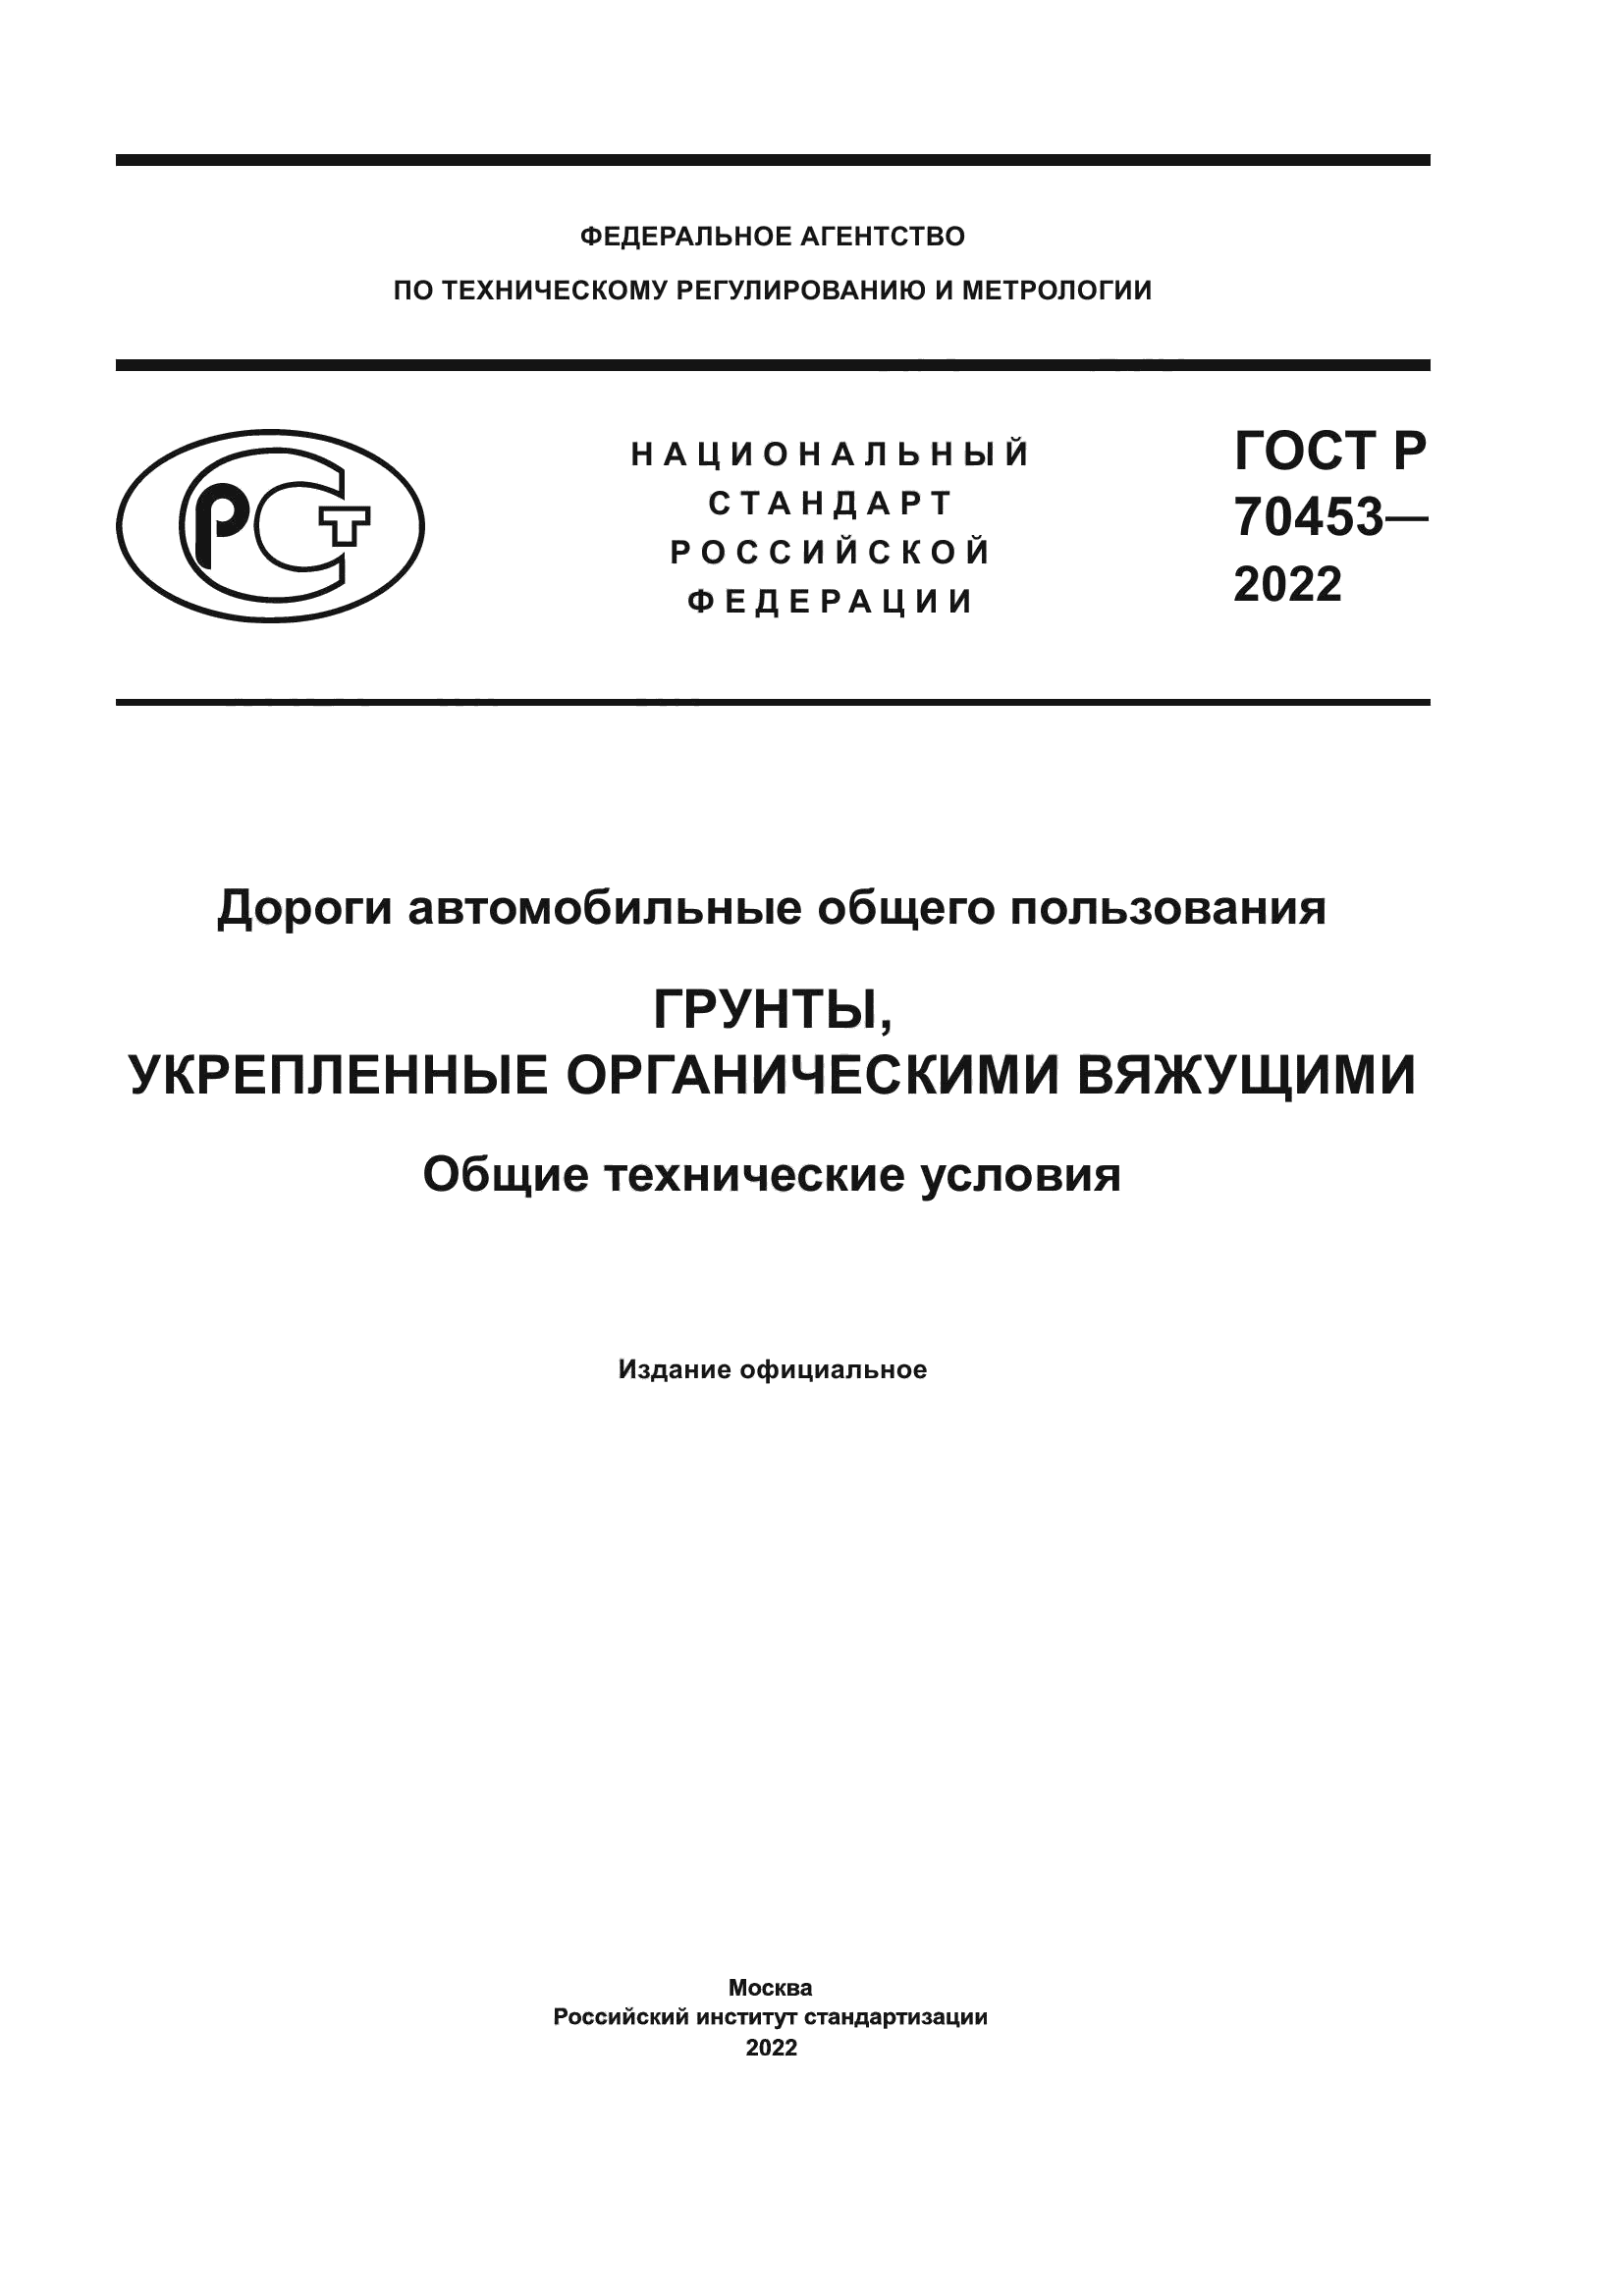 ГОСТ Р 70453-2022